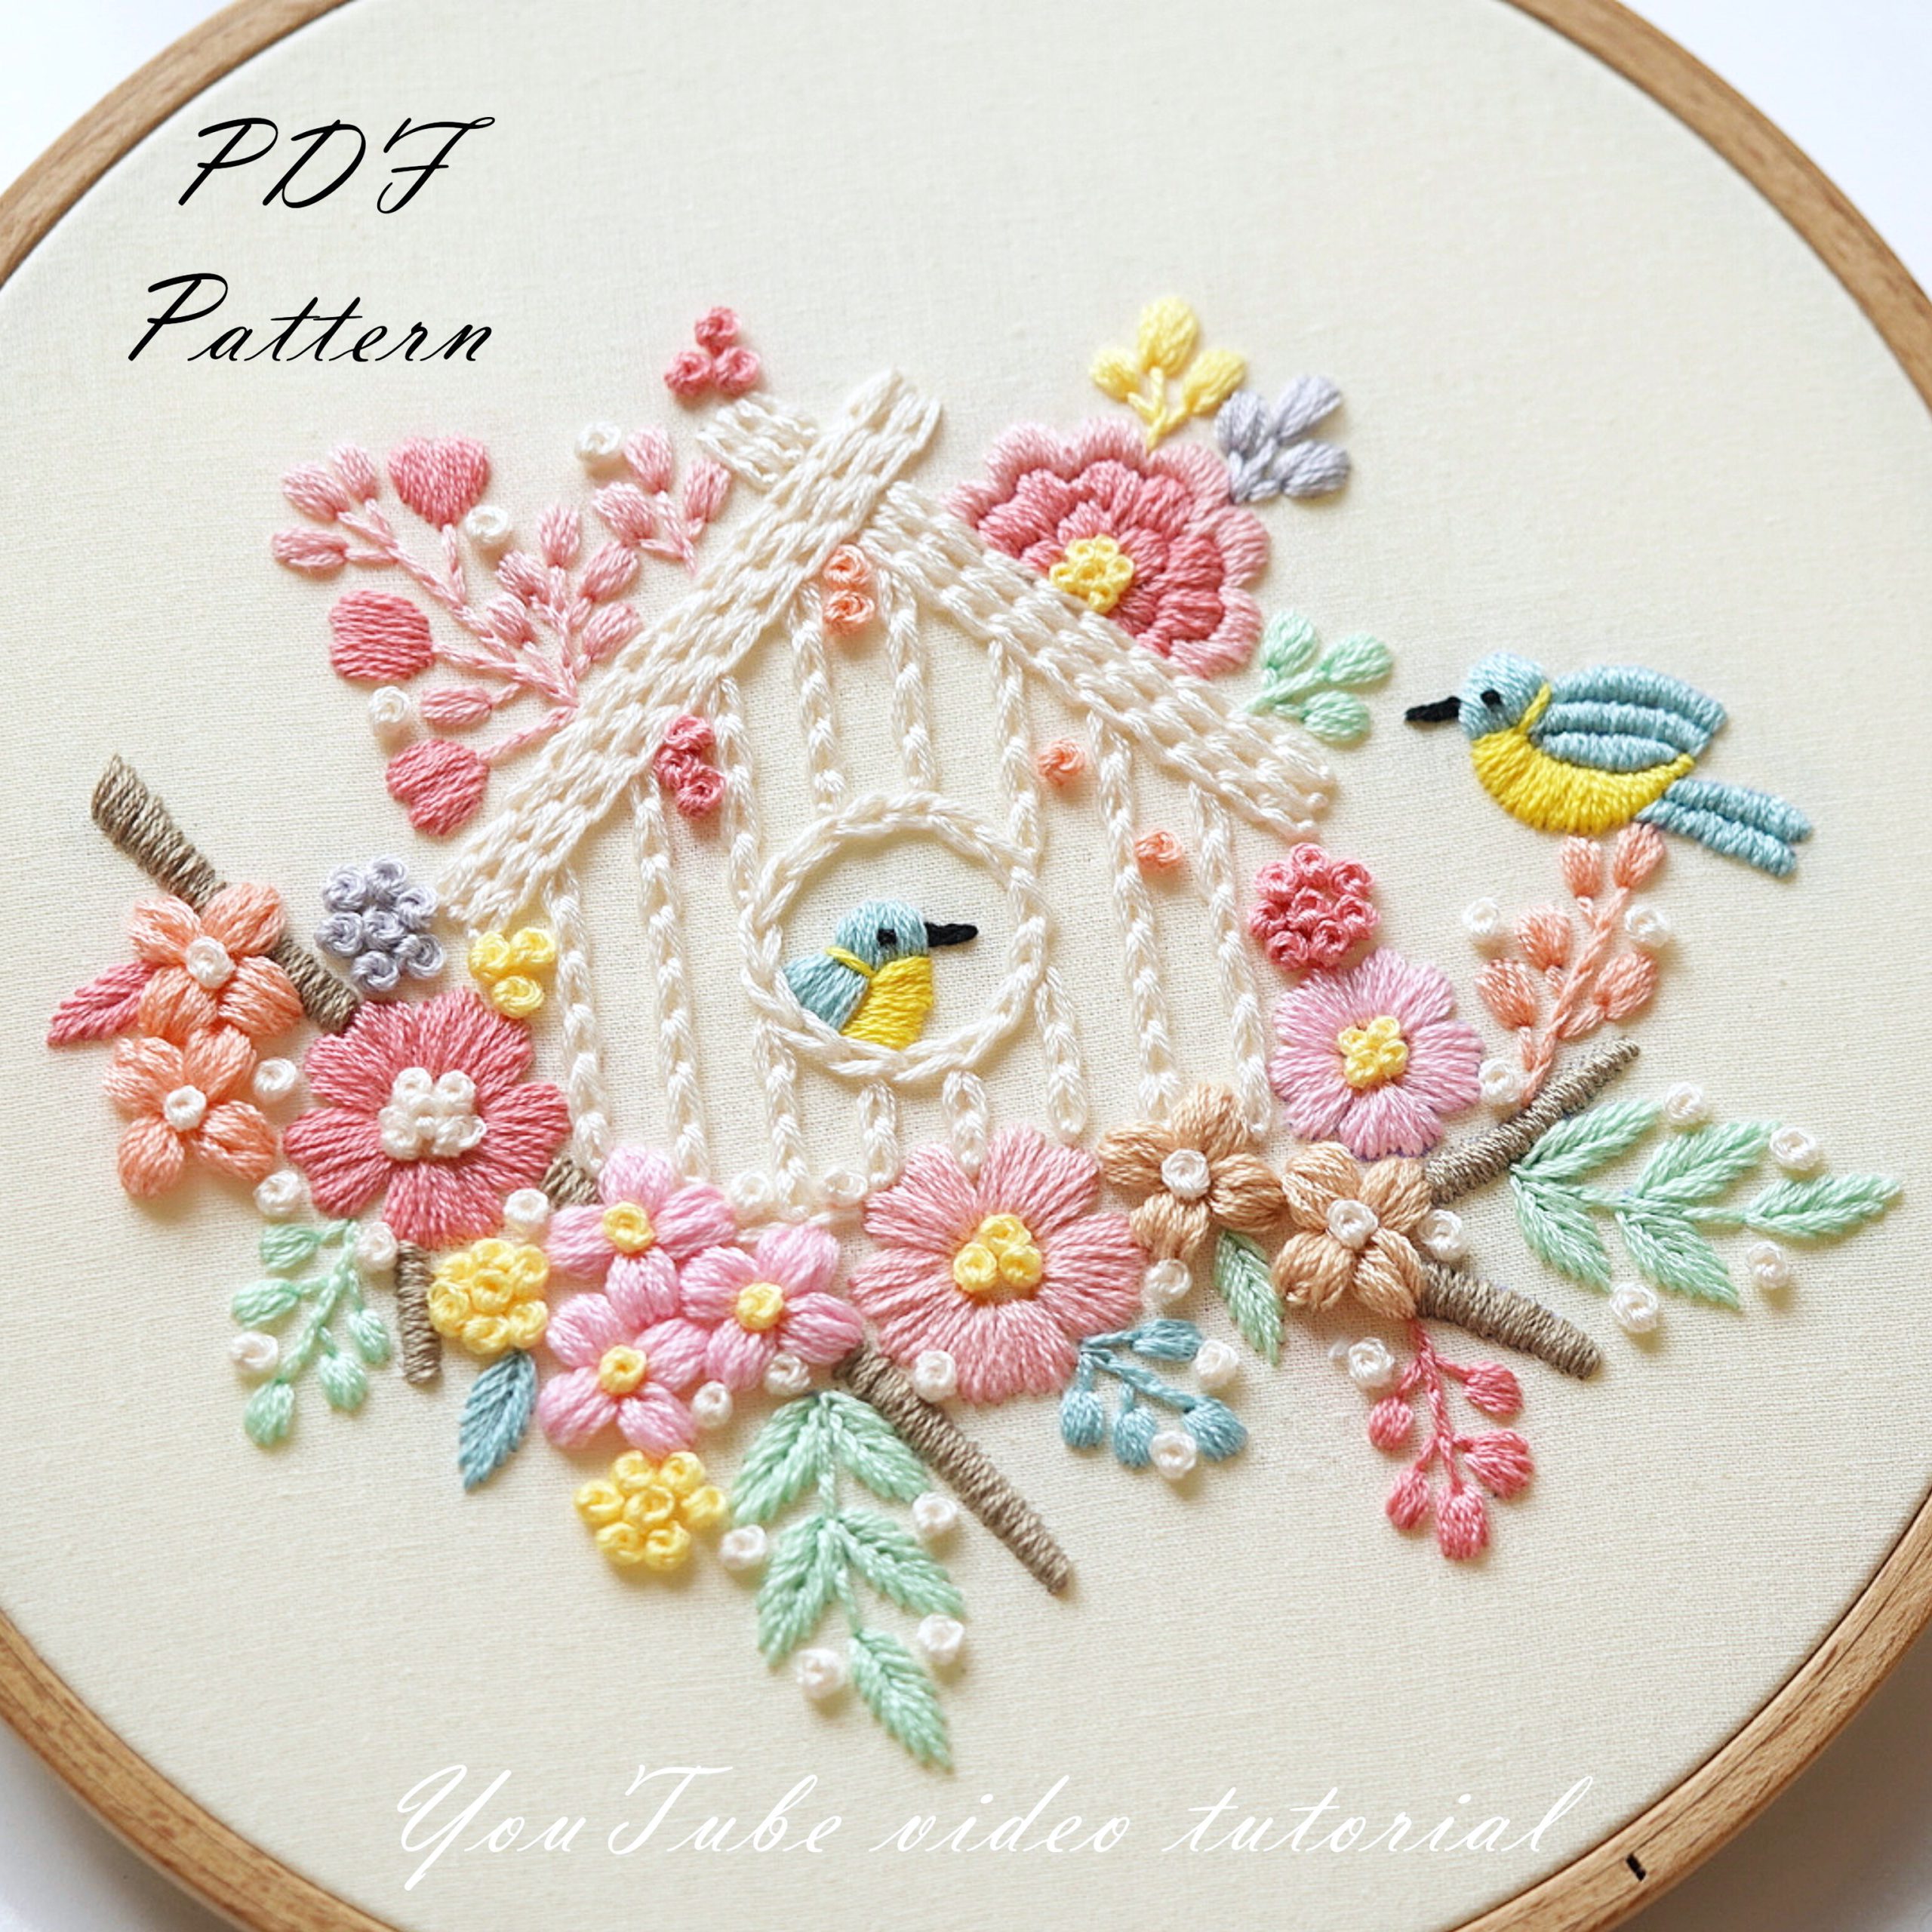 Bird house embroidery